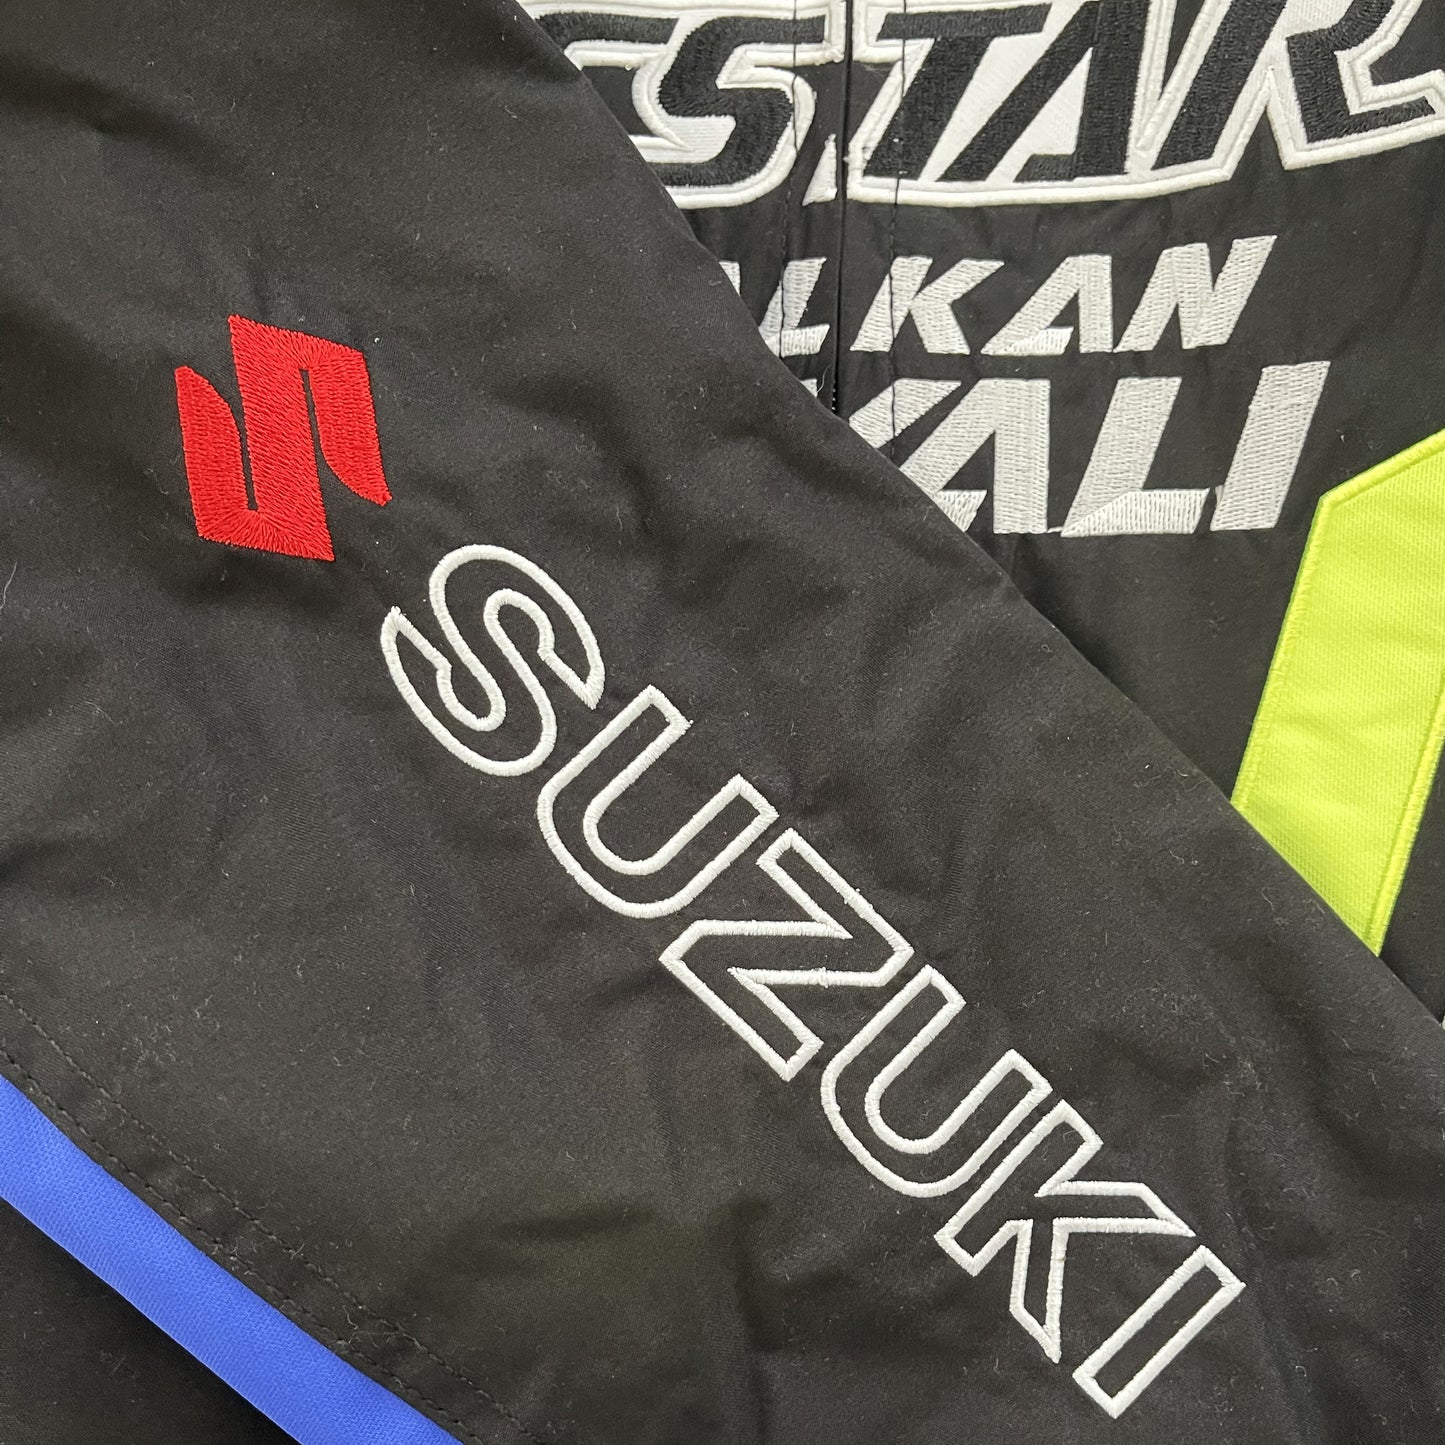 Suzuki Motorcycle Racer Jacket